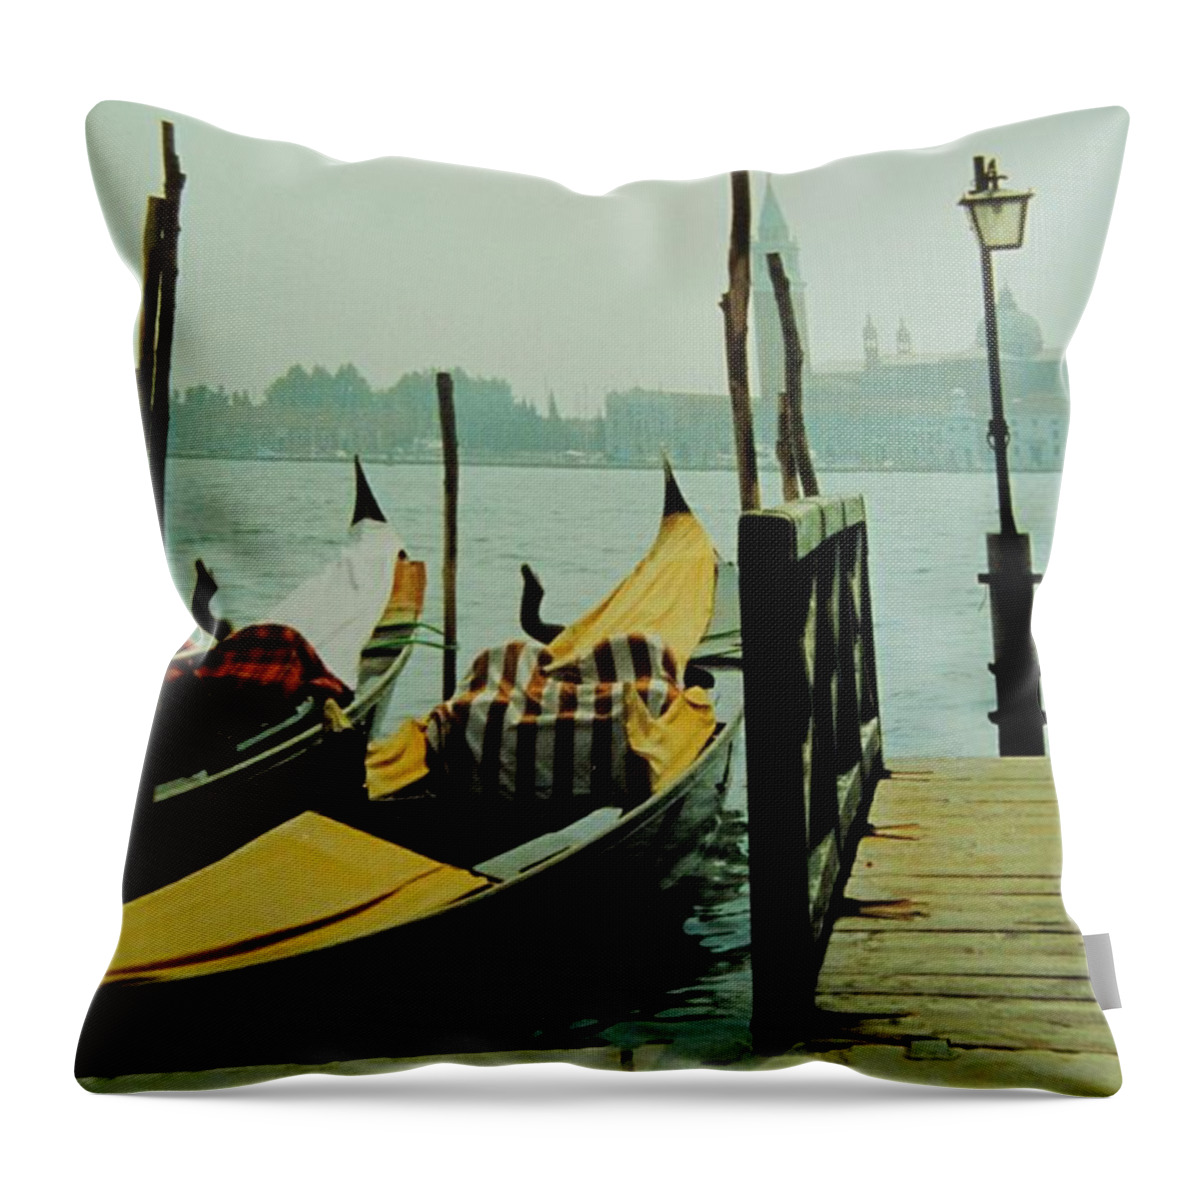 Venice Throw Pillow featuring the photograph Gondolas by Ian MacDonald